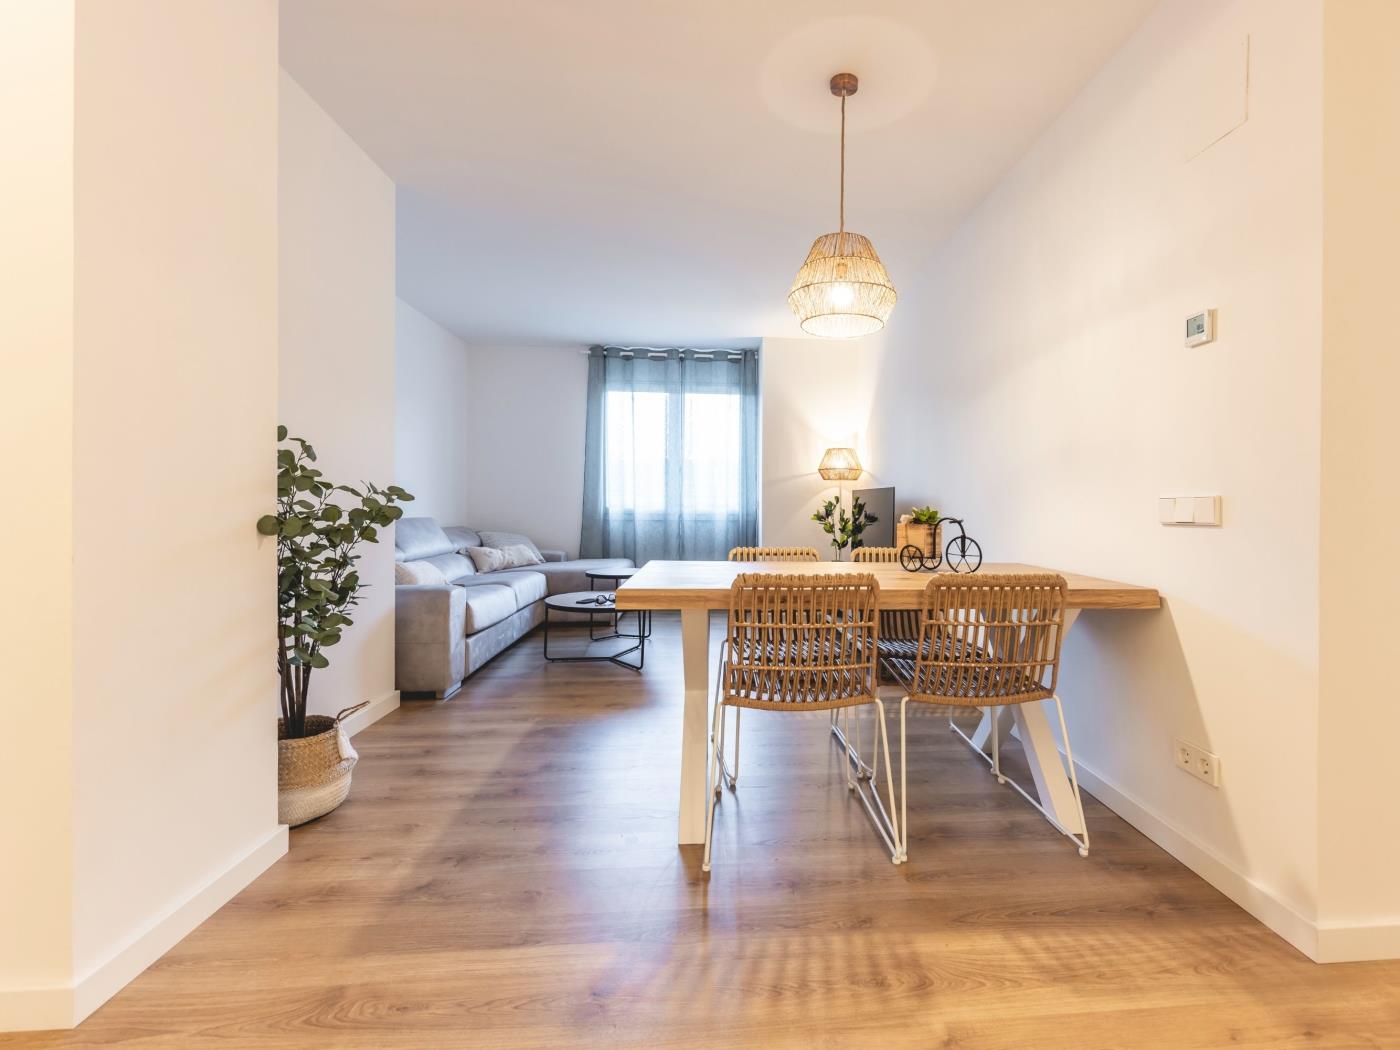 Bravissimo Afra, 2-bedroom apartment in Girona